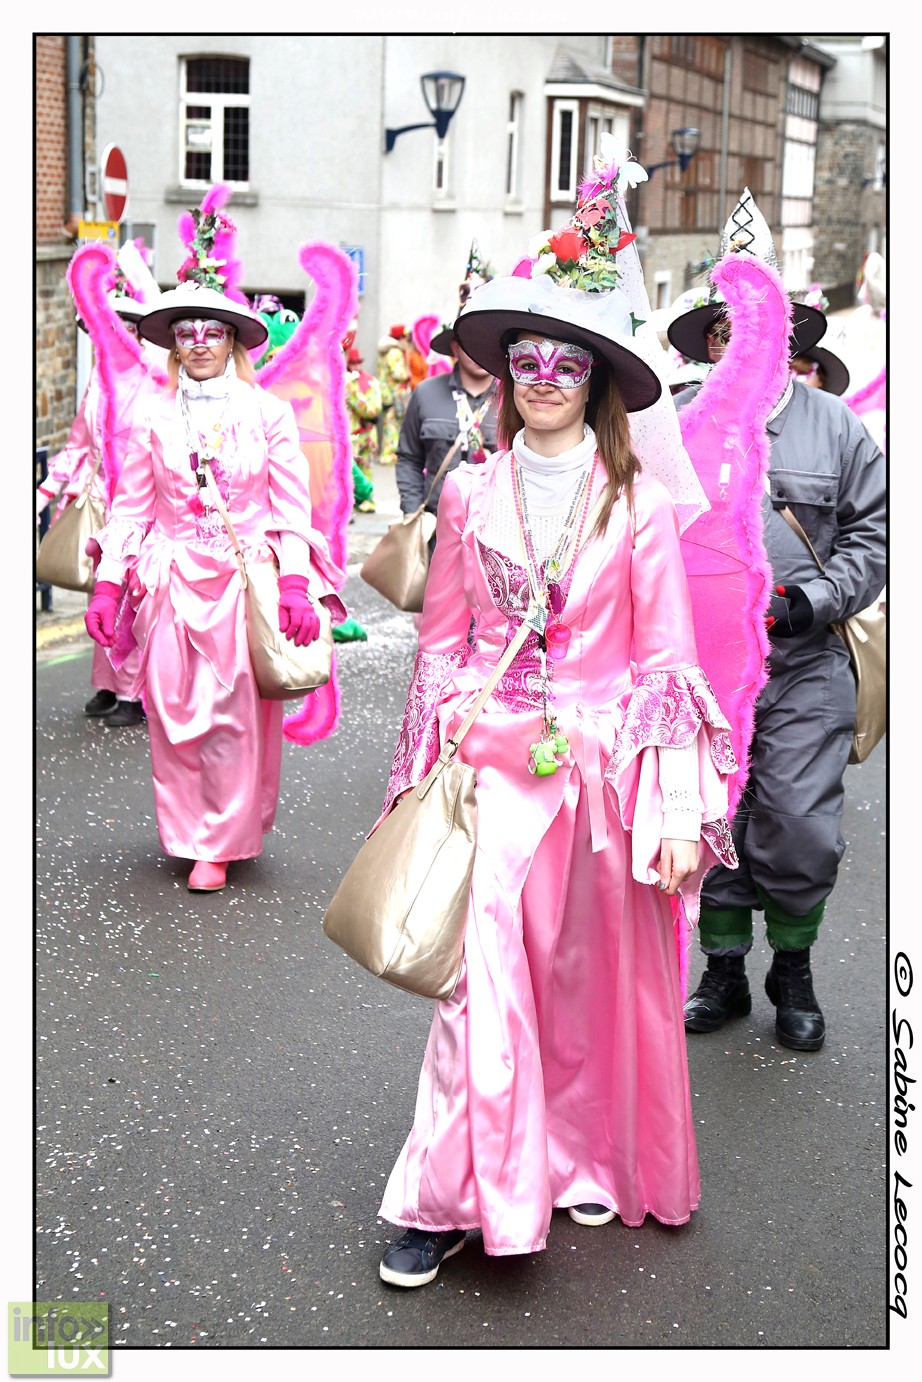 images/stories/PHOTOSREP/La-Roche-en-Ardenne/Carnaval2/Carnaval-larocheb048